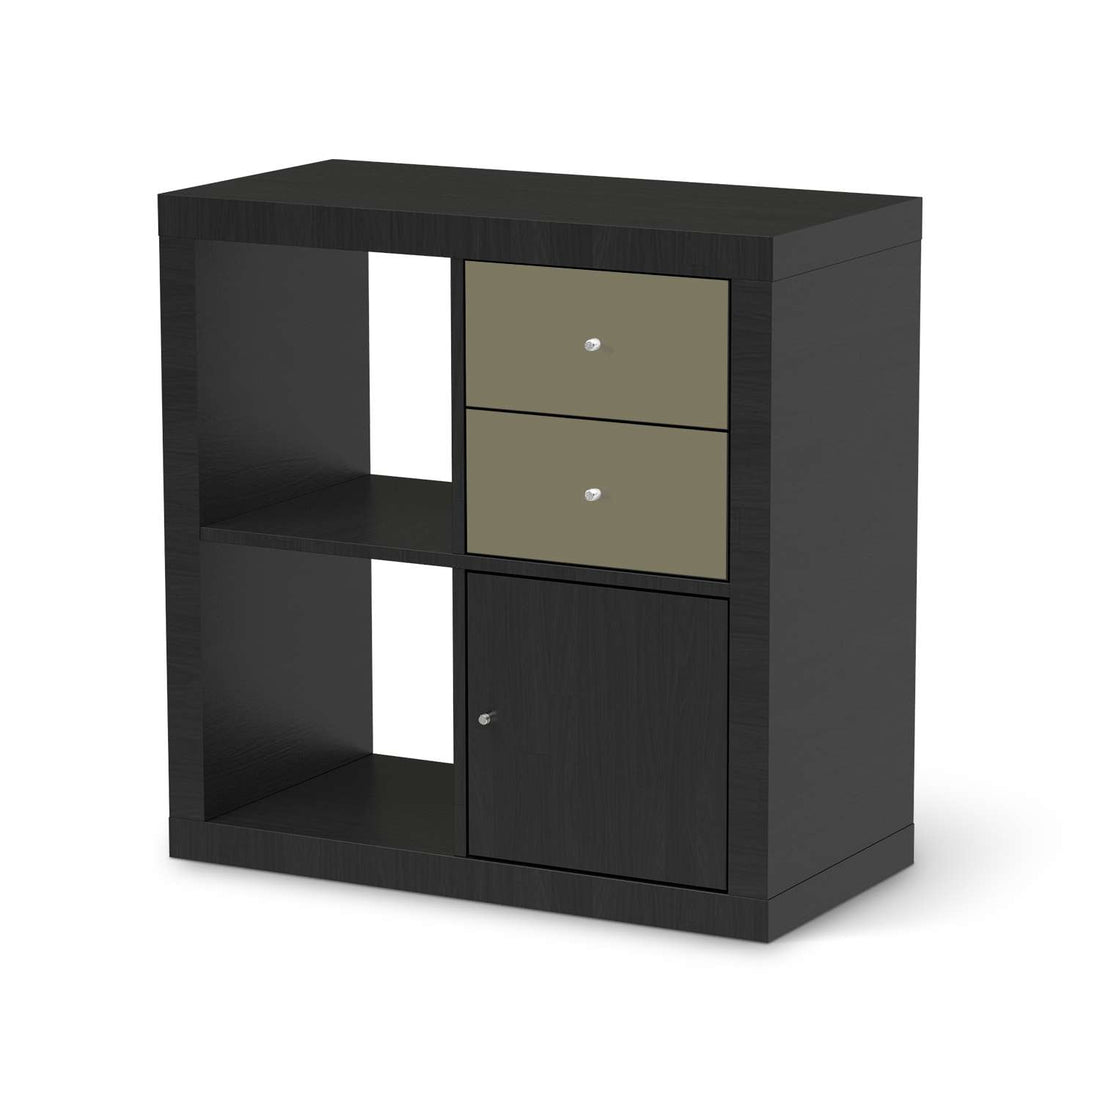 Möbelfolie Braungrau Light - IKEA Kallax Regal Schubladen - schwarz